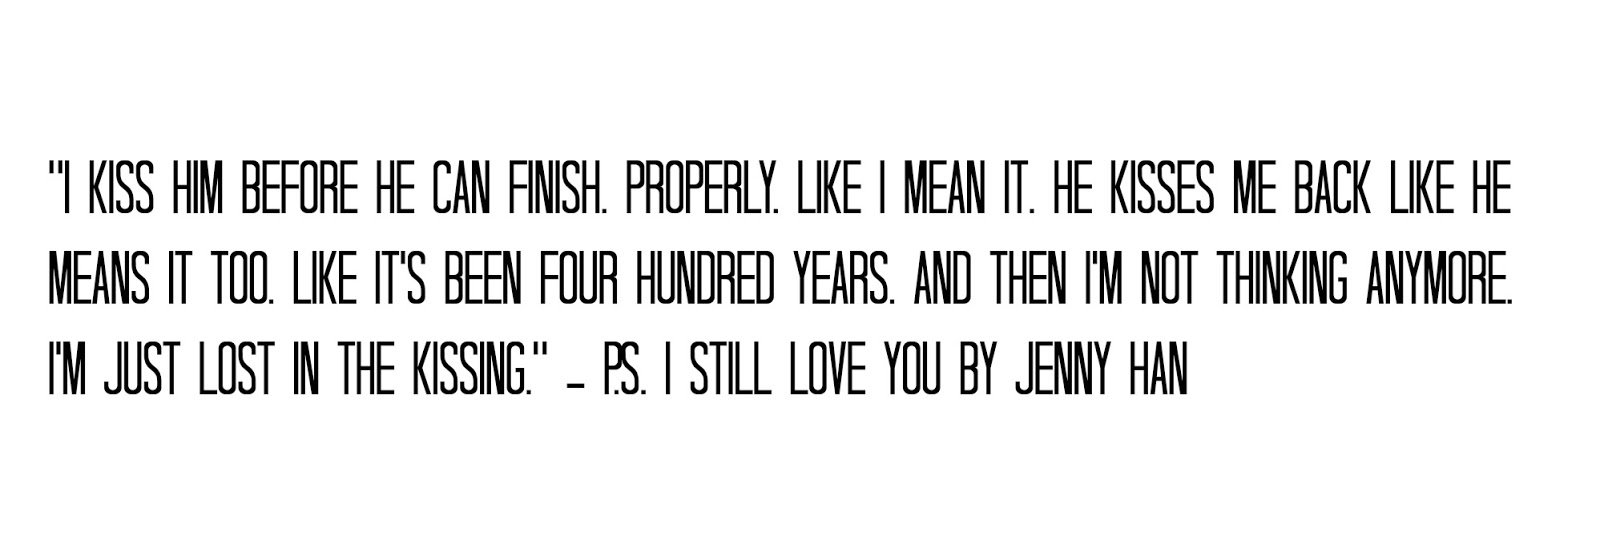 P S I Still Love You by Jenny Han